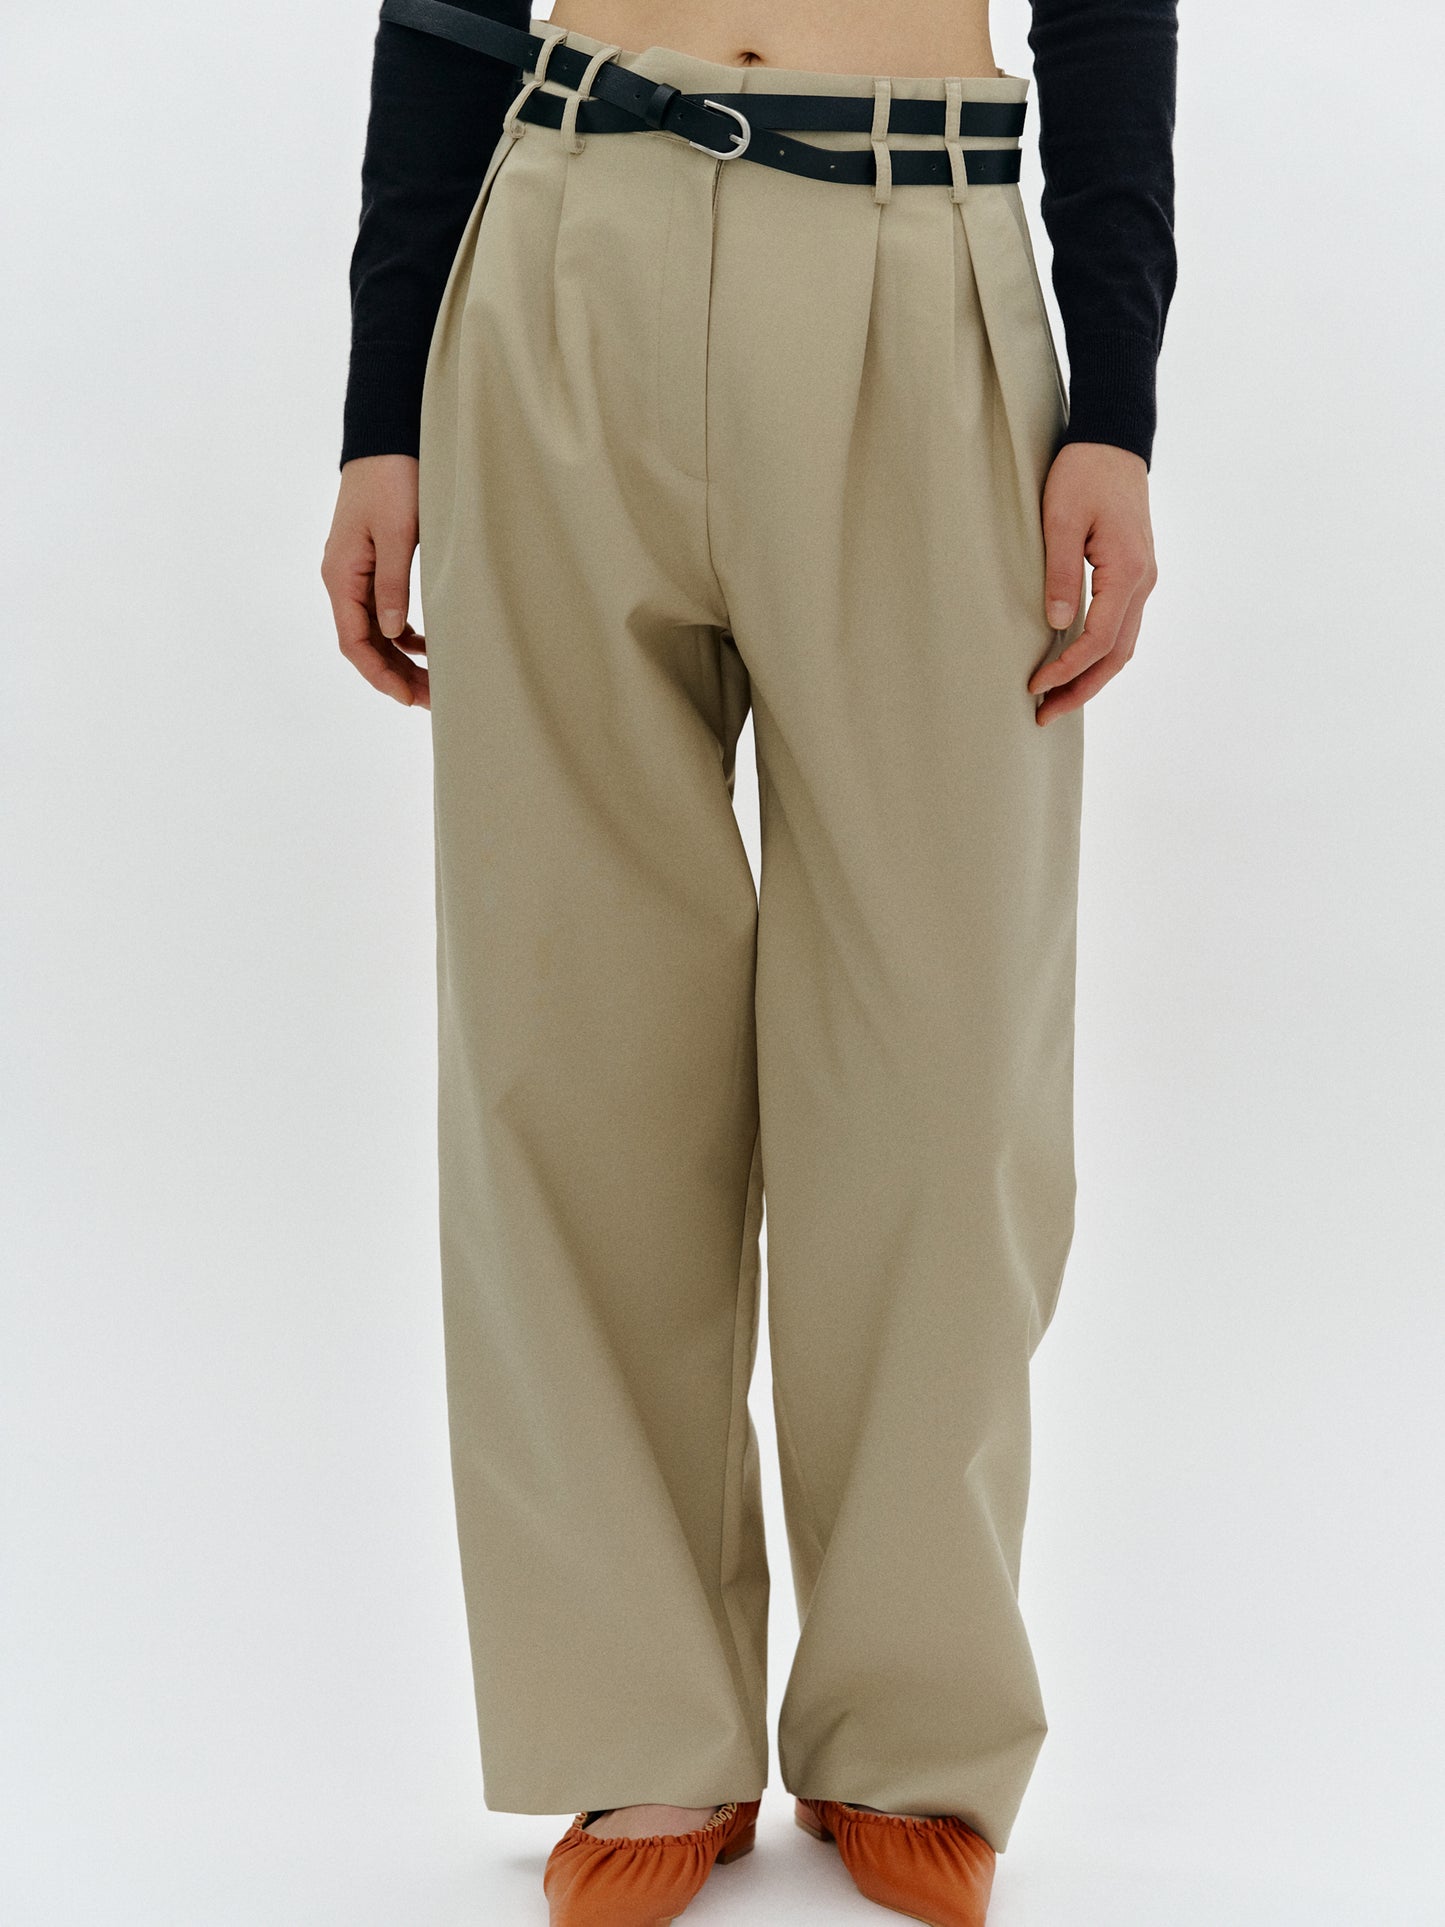 Prettylittlething Women's Double Belt Loop Suit Pants